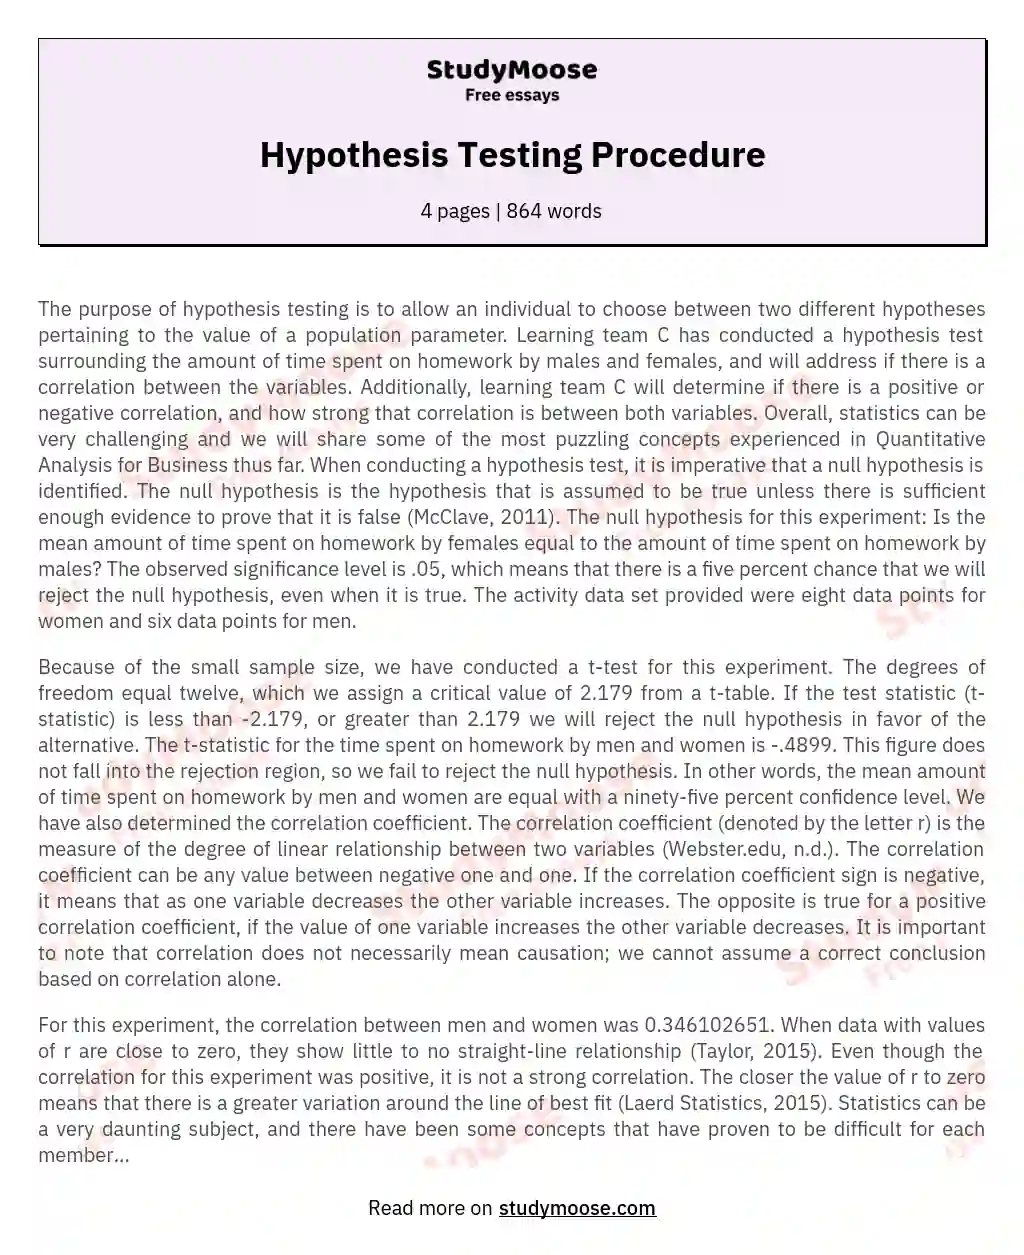 Hypothesis Testing Procedure essay